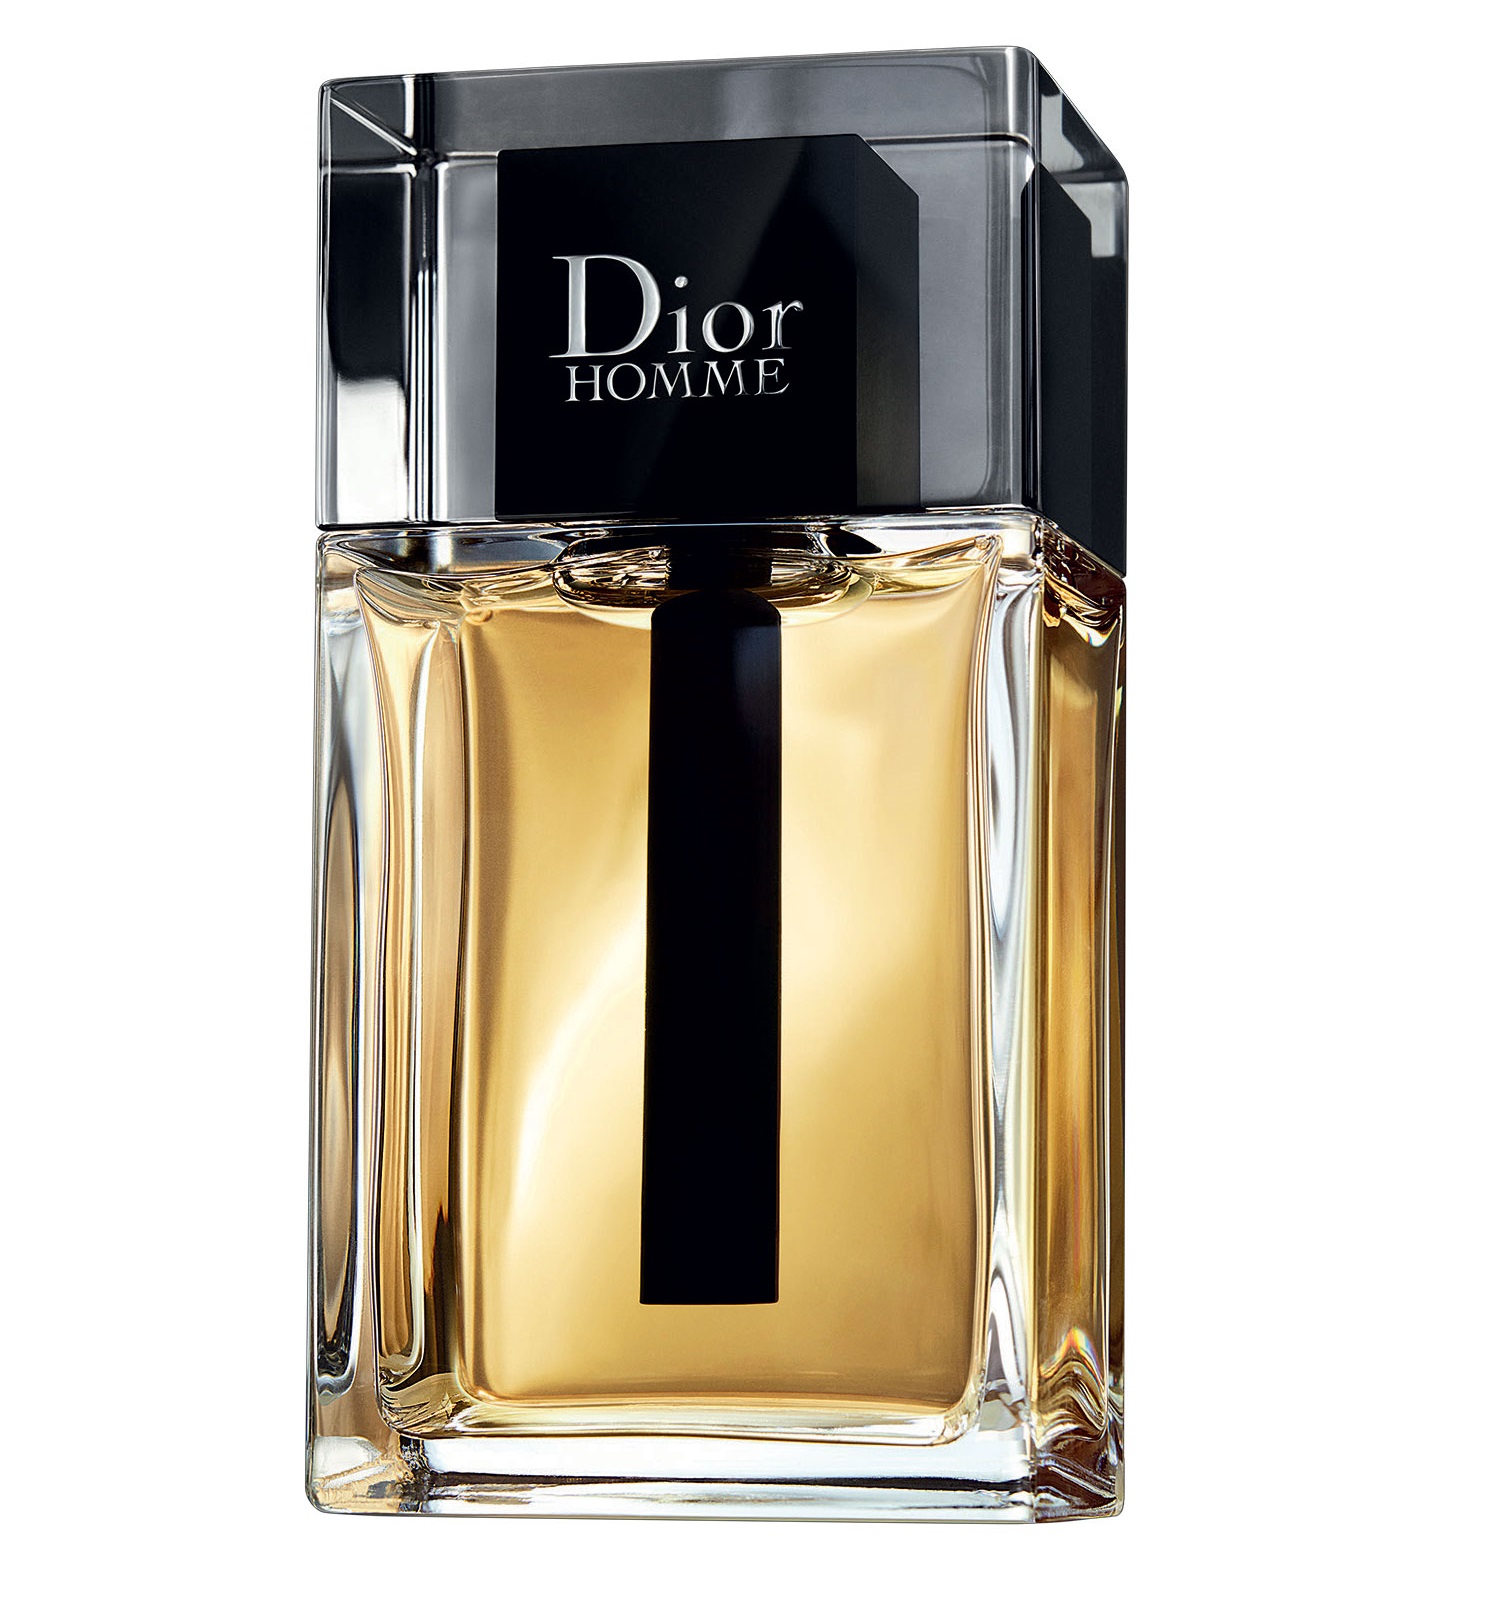 Min Mangel klein Christian Dior Homme (2020): Why Homme, Dior? ~ Fragrance Reviews